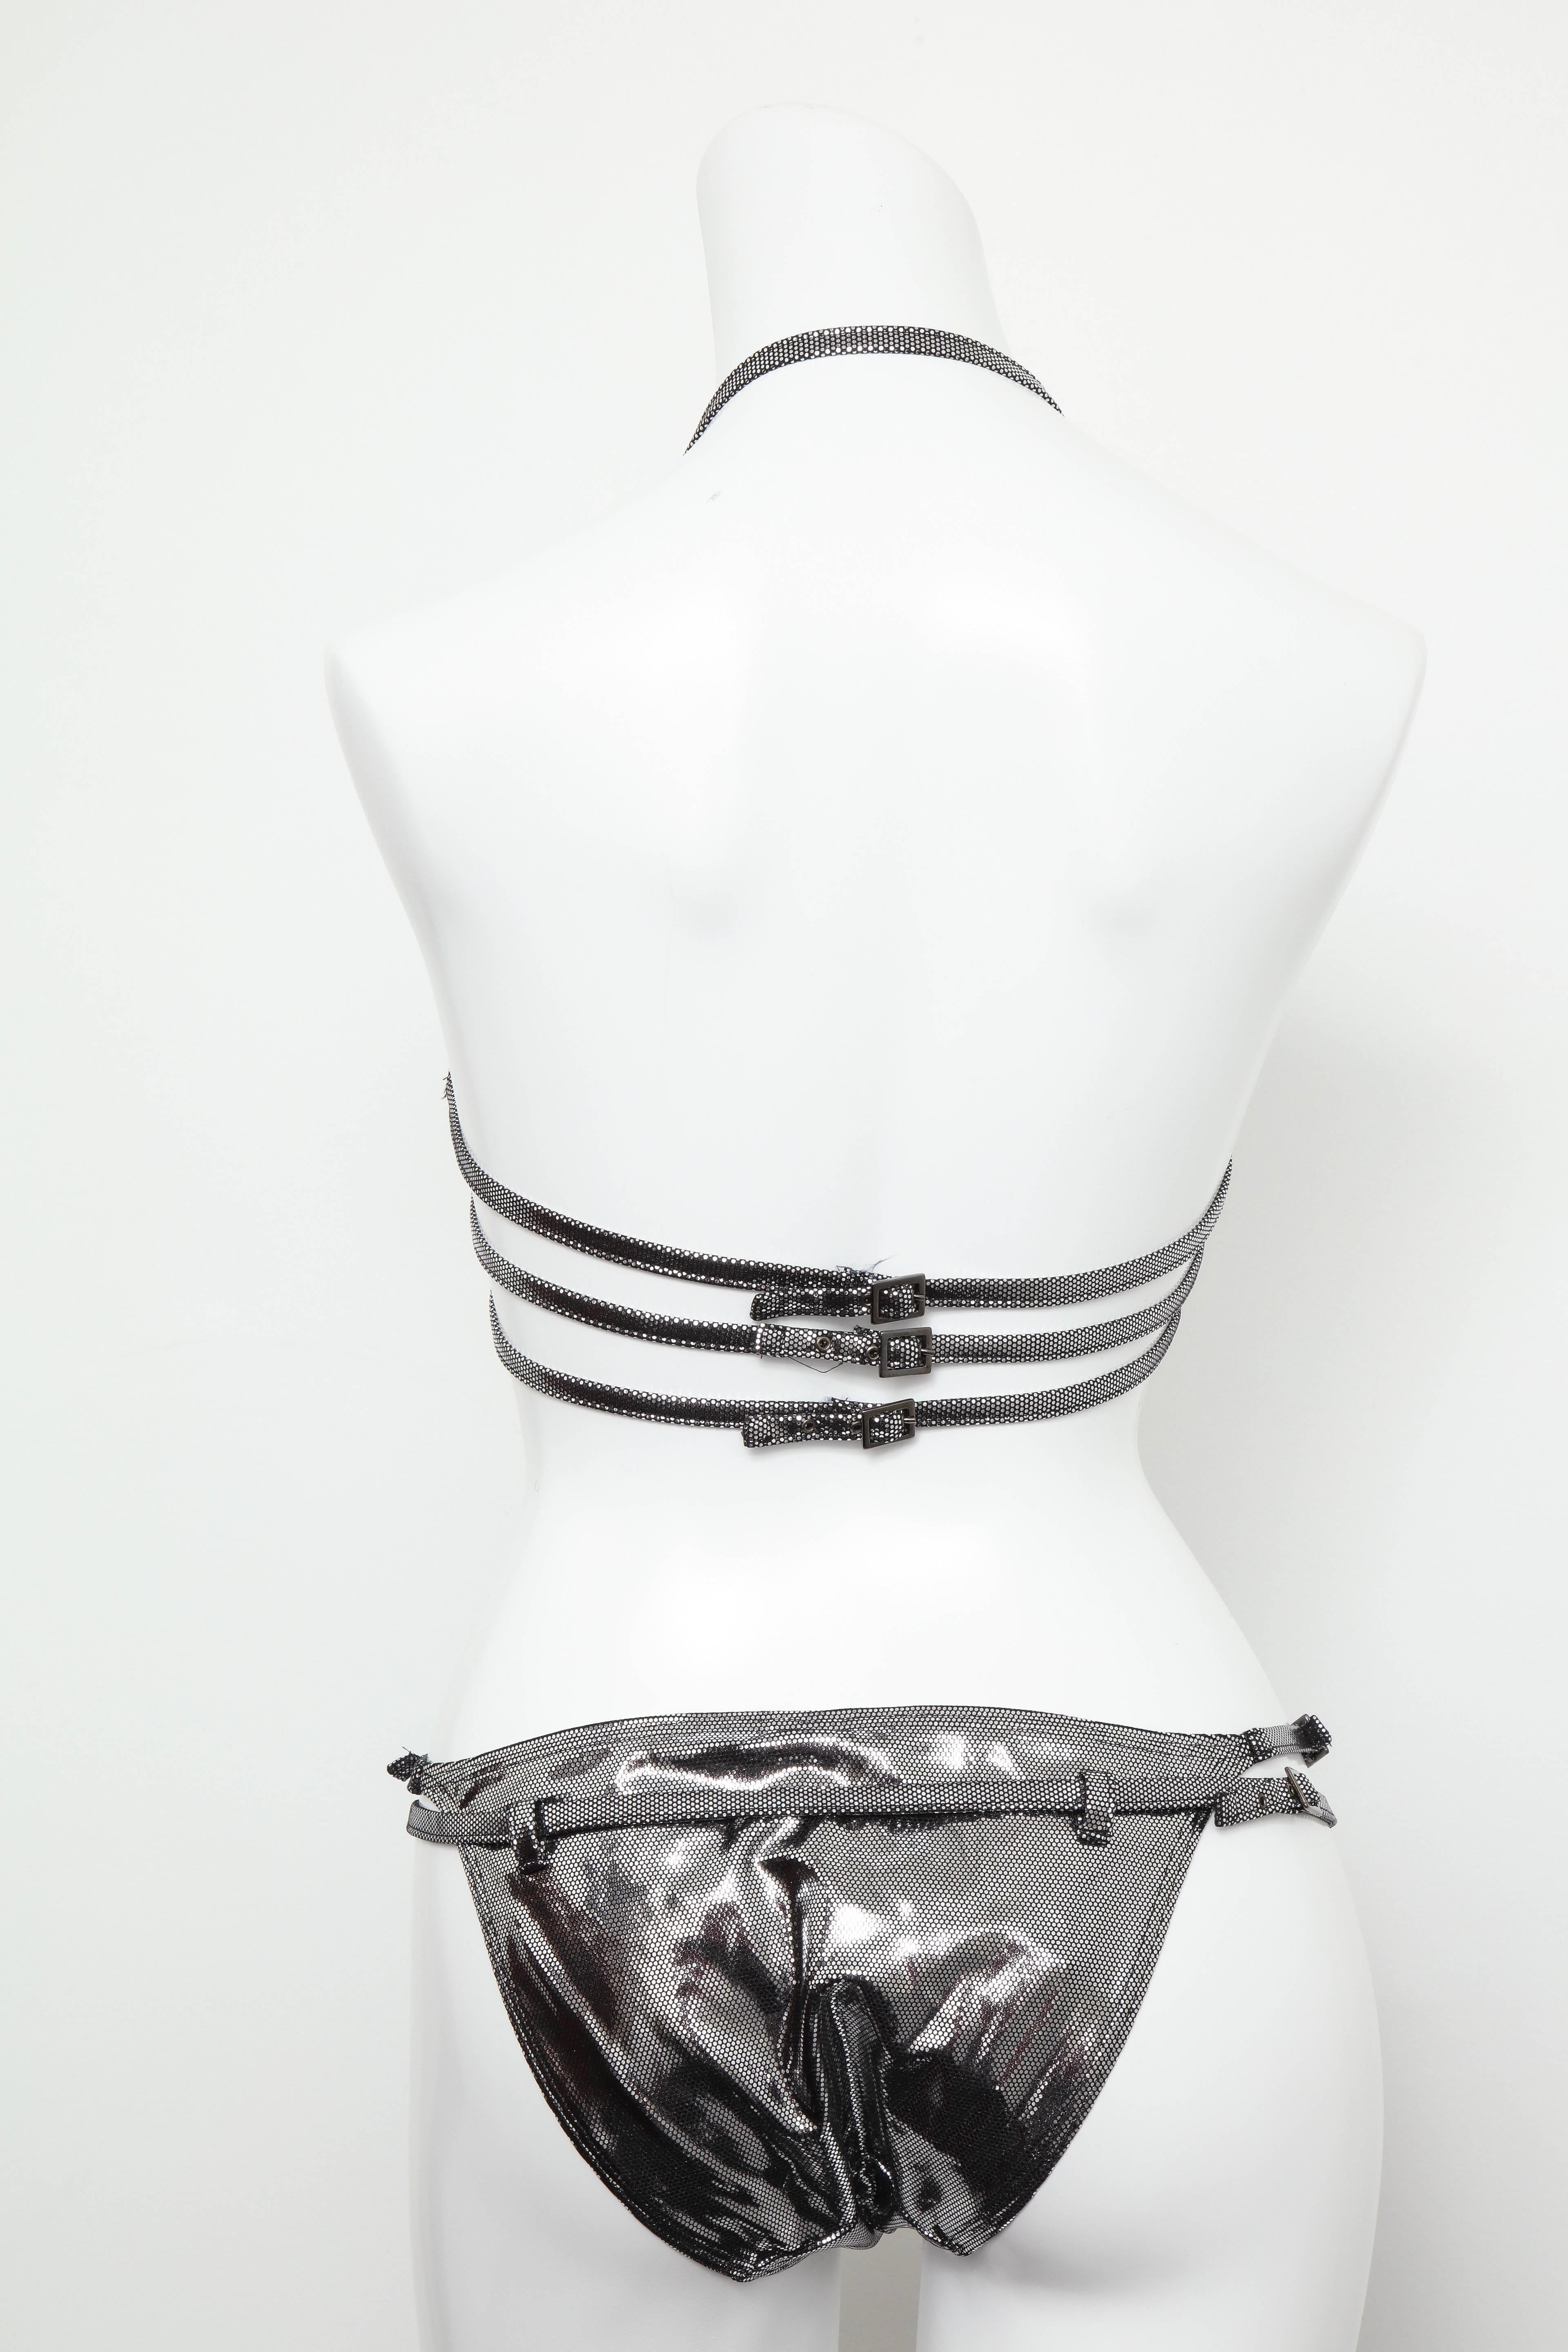 John Galliano for Christian Dior Silver Swimsuit Bikini  For Sale 1